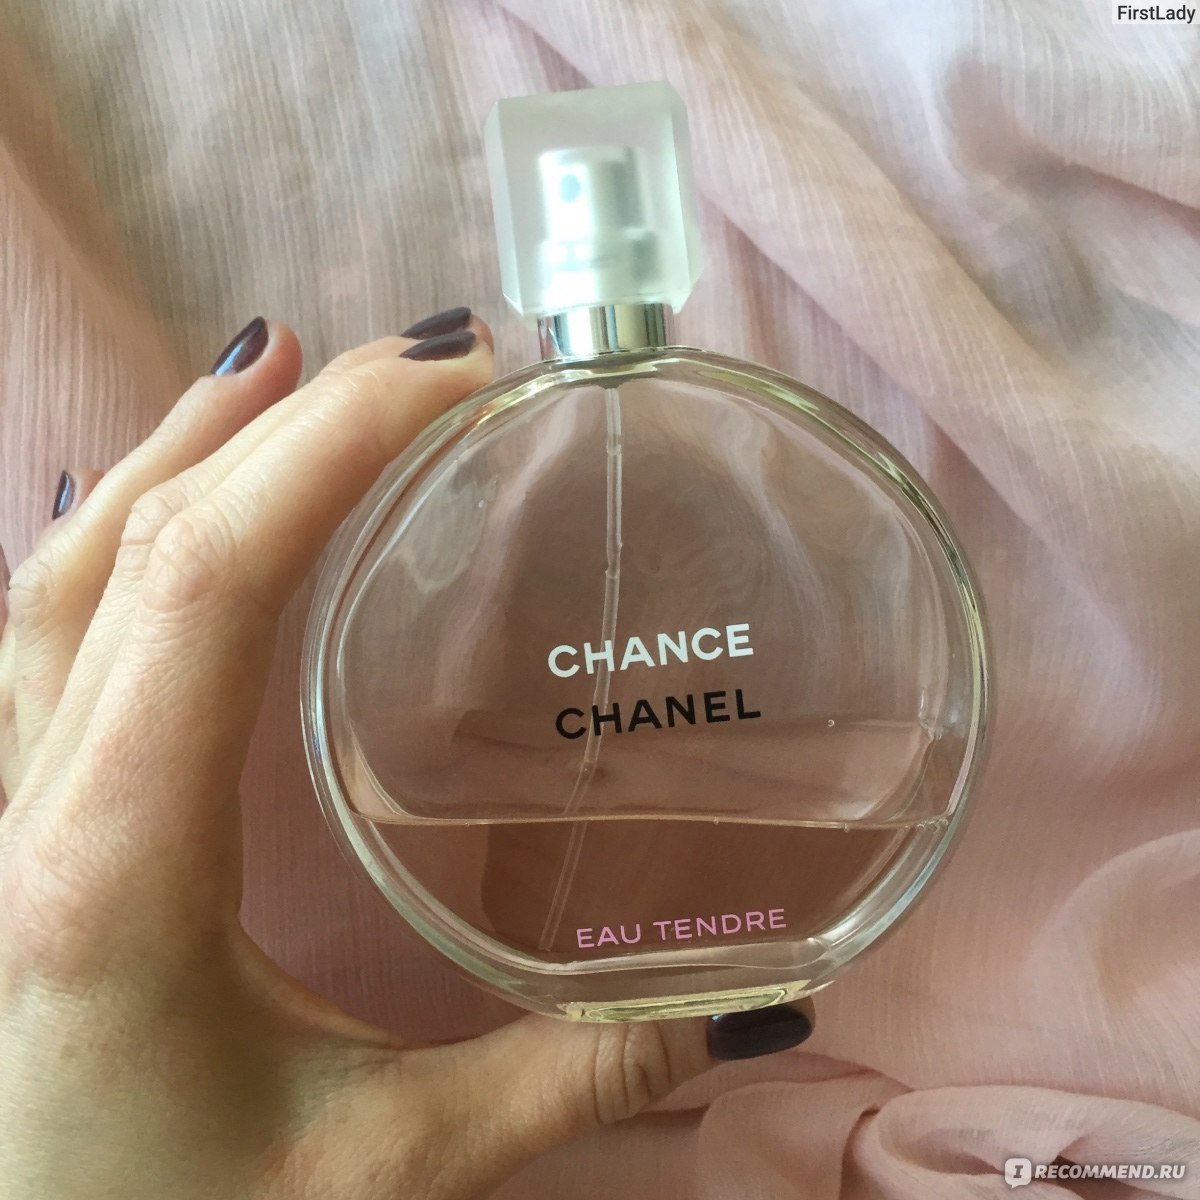 Шанель шанс похожие ароматы. Chance Chanel Eau tendre 65 ml. Шанель шанс пудровый аромат. Шанель шанс тендер пудровые. Chanel chance Eau Fraiche 30 мл.